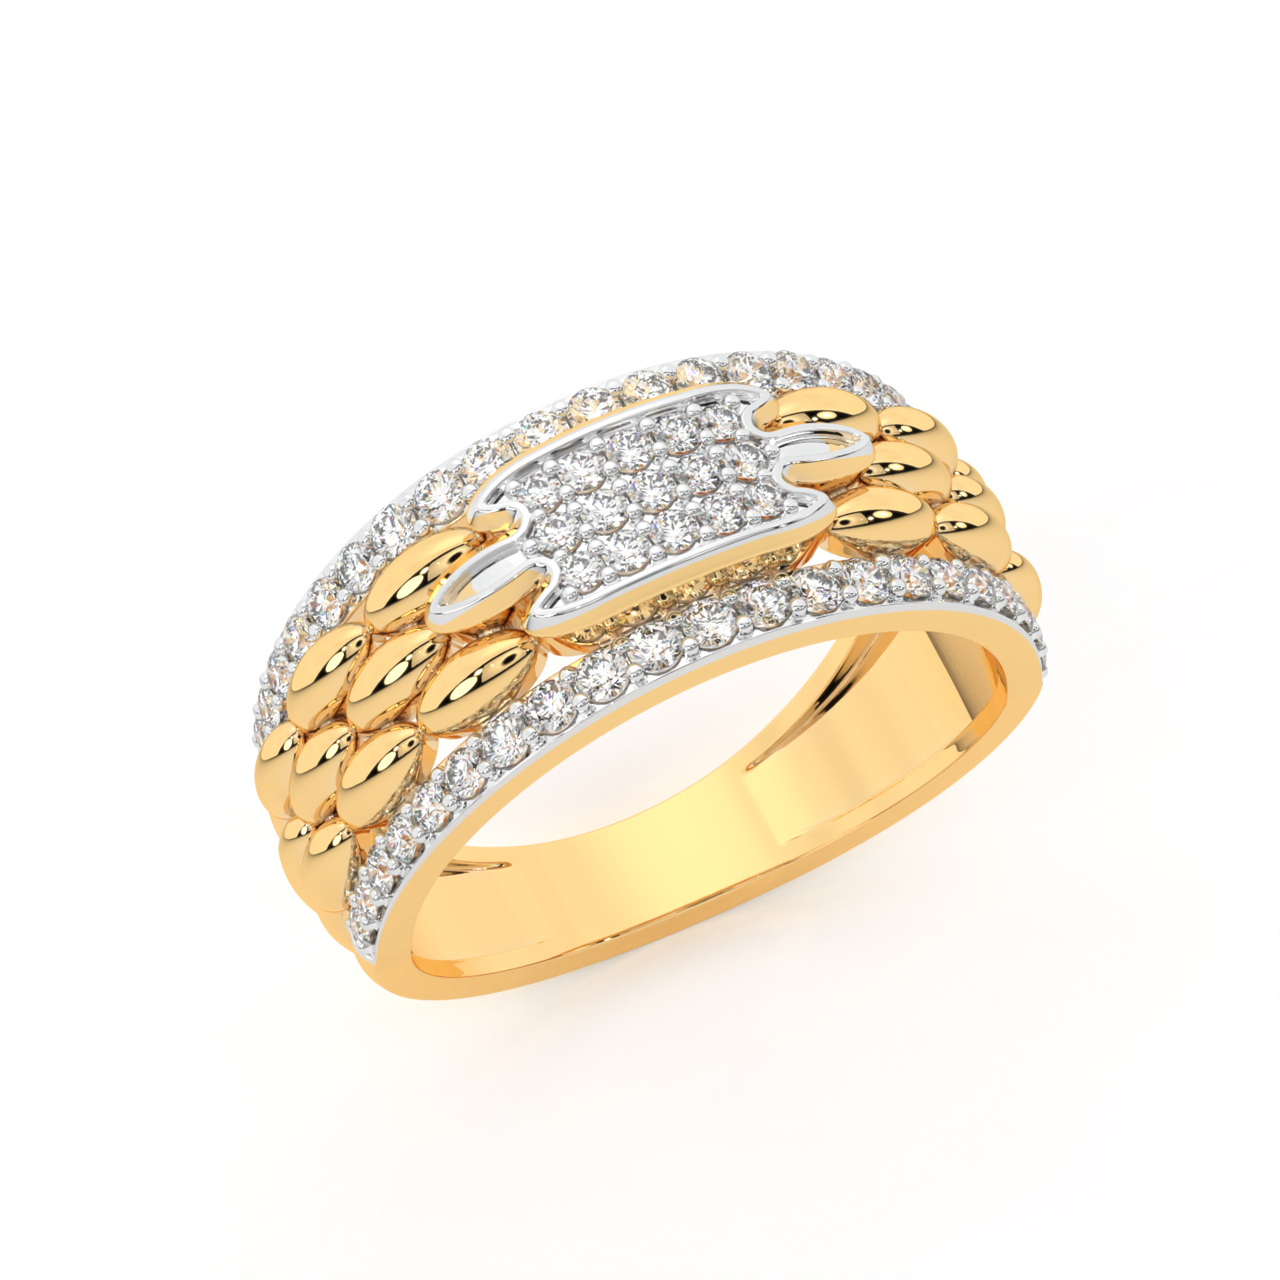 Jewelili Men's Statement Diamond Ring with Natural White Round Diamonds in  10K Yellow Gold 2.00 CTTW